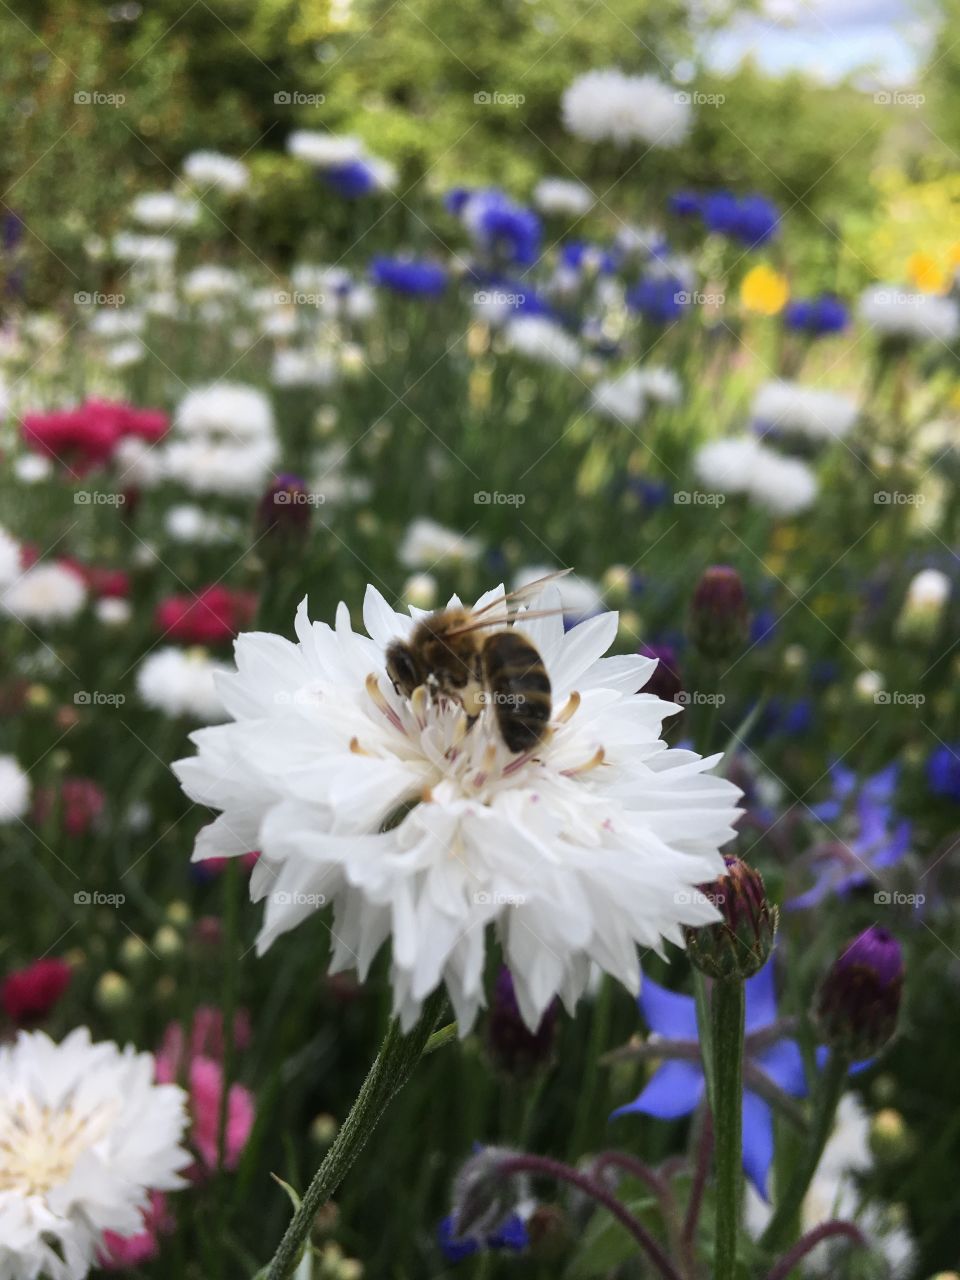 Cornflowers in the summer garden encouraging the local bee population to flourish